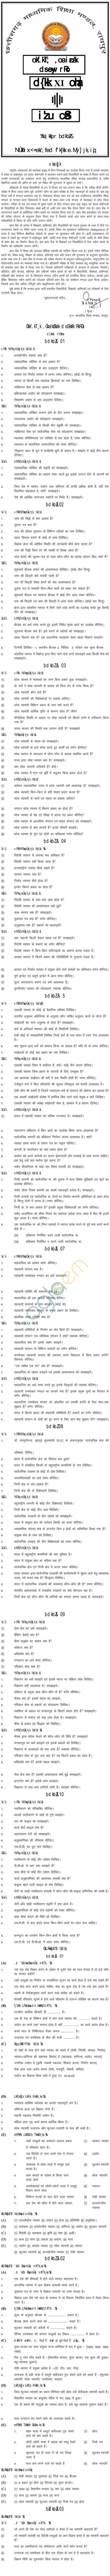 Chhattisgarh Board Class 11 Question Bank - Vanijya & Prabandh Ke multatva